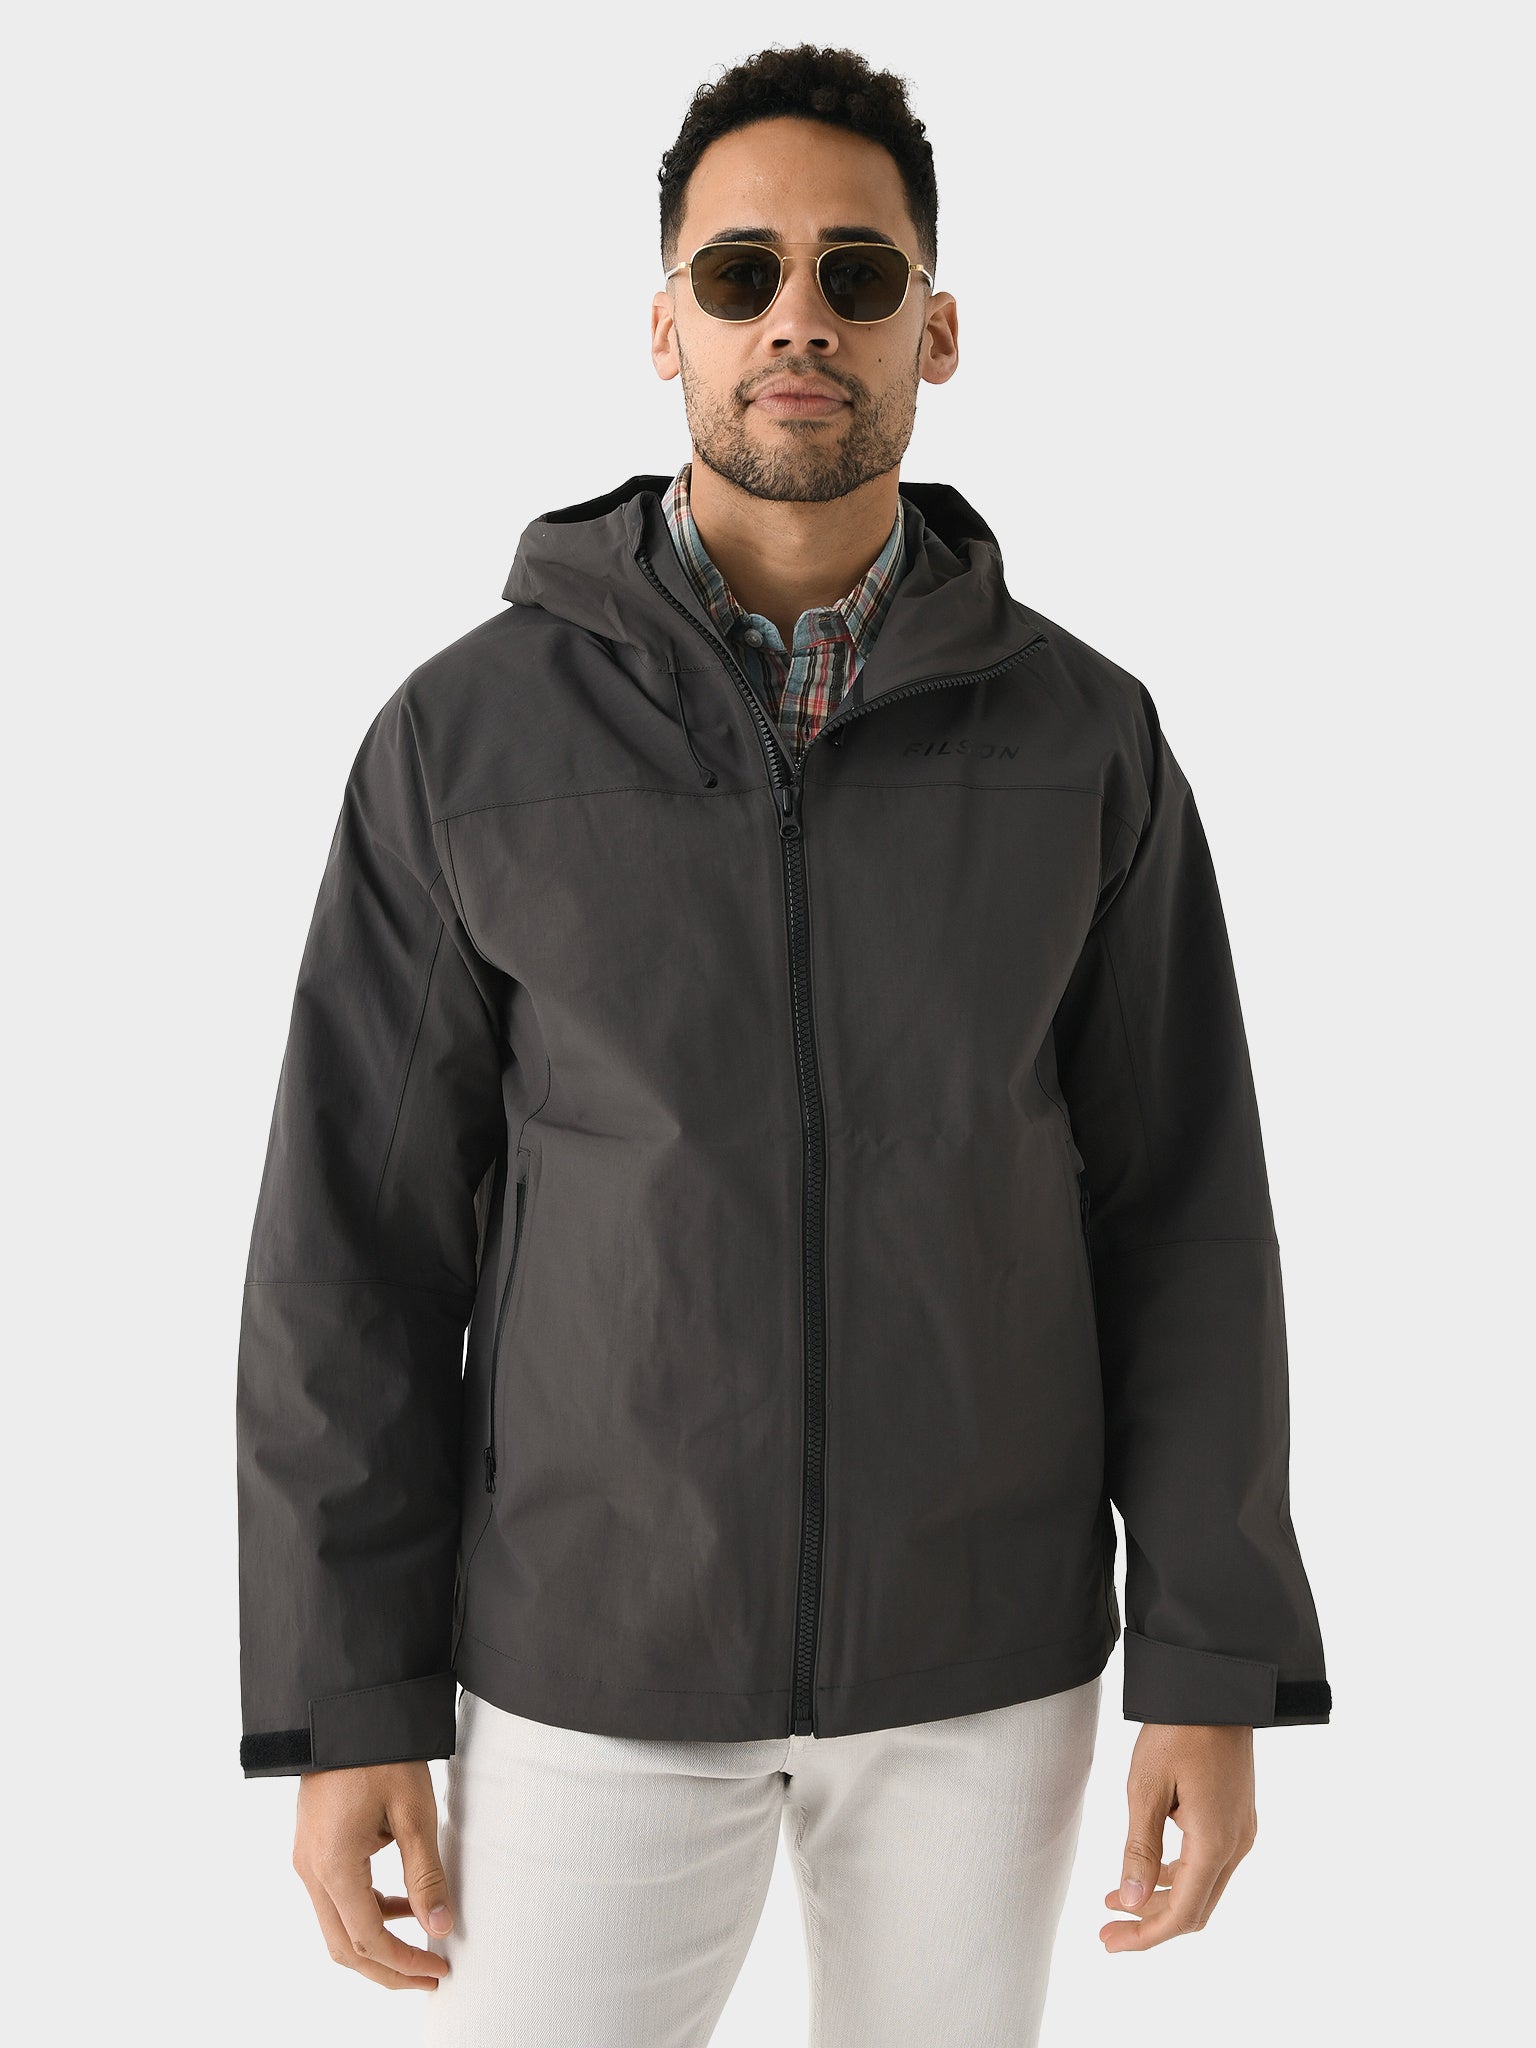 Men's Swiftwater Rain Jacket — Lightweight Rain Shell